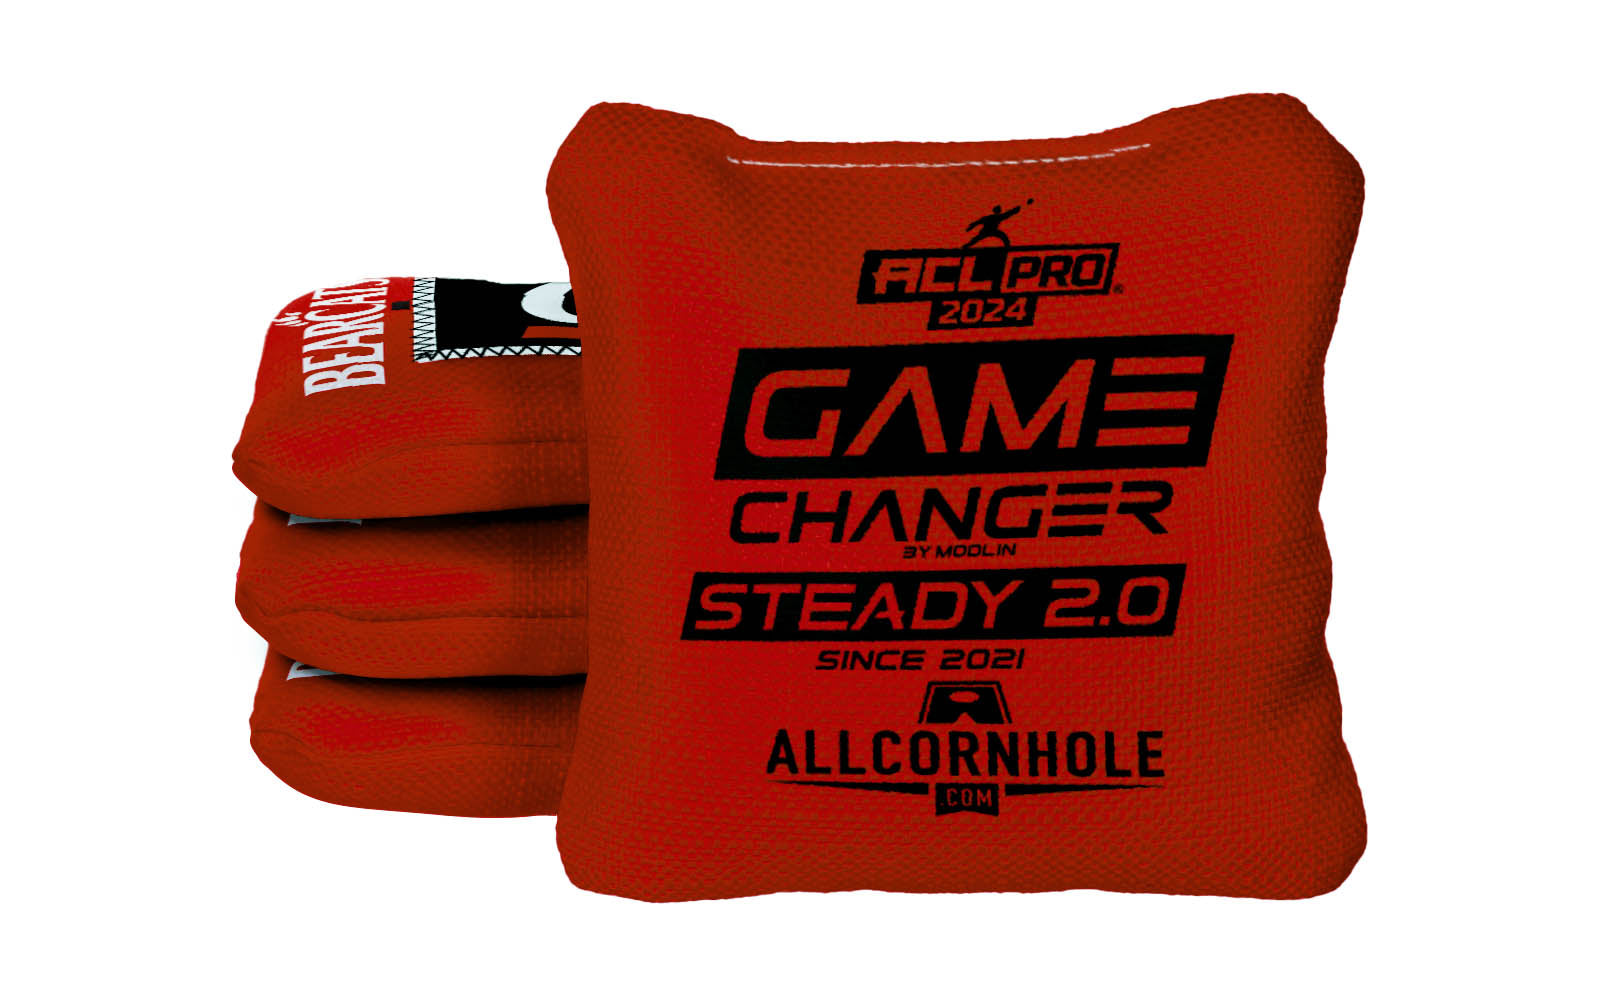 Officially Licensed Collegiate Cornhole Bags - AllCornhole Game Changers Steady 2.0 - Set of 4 - University of Cincinnati